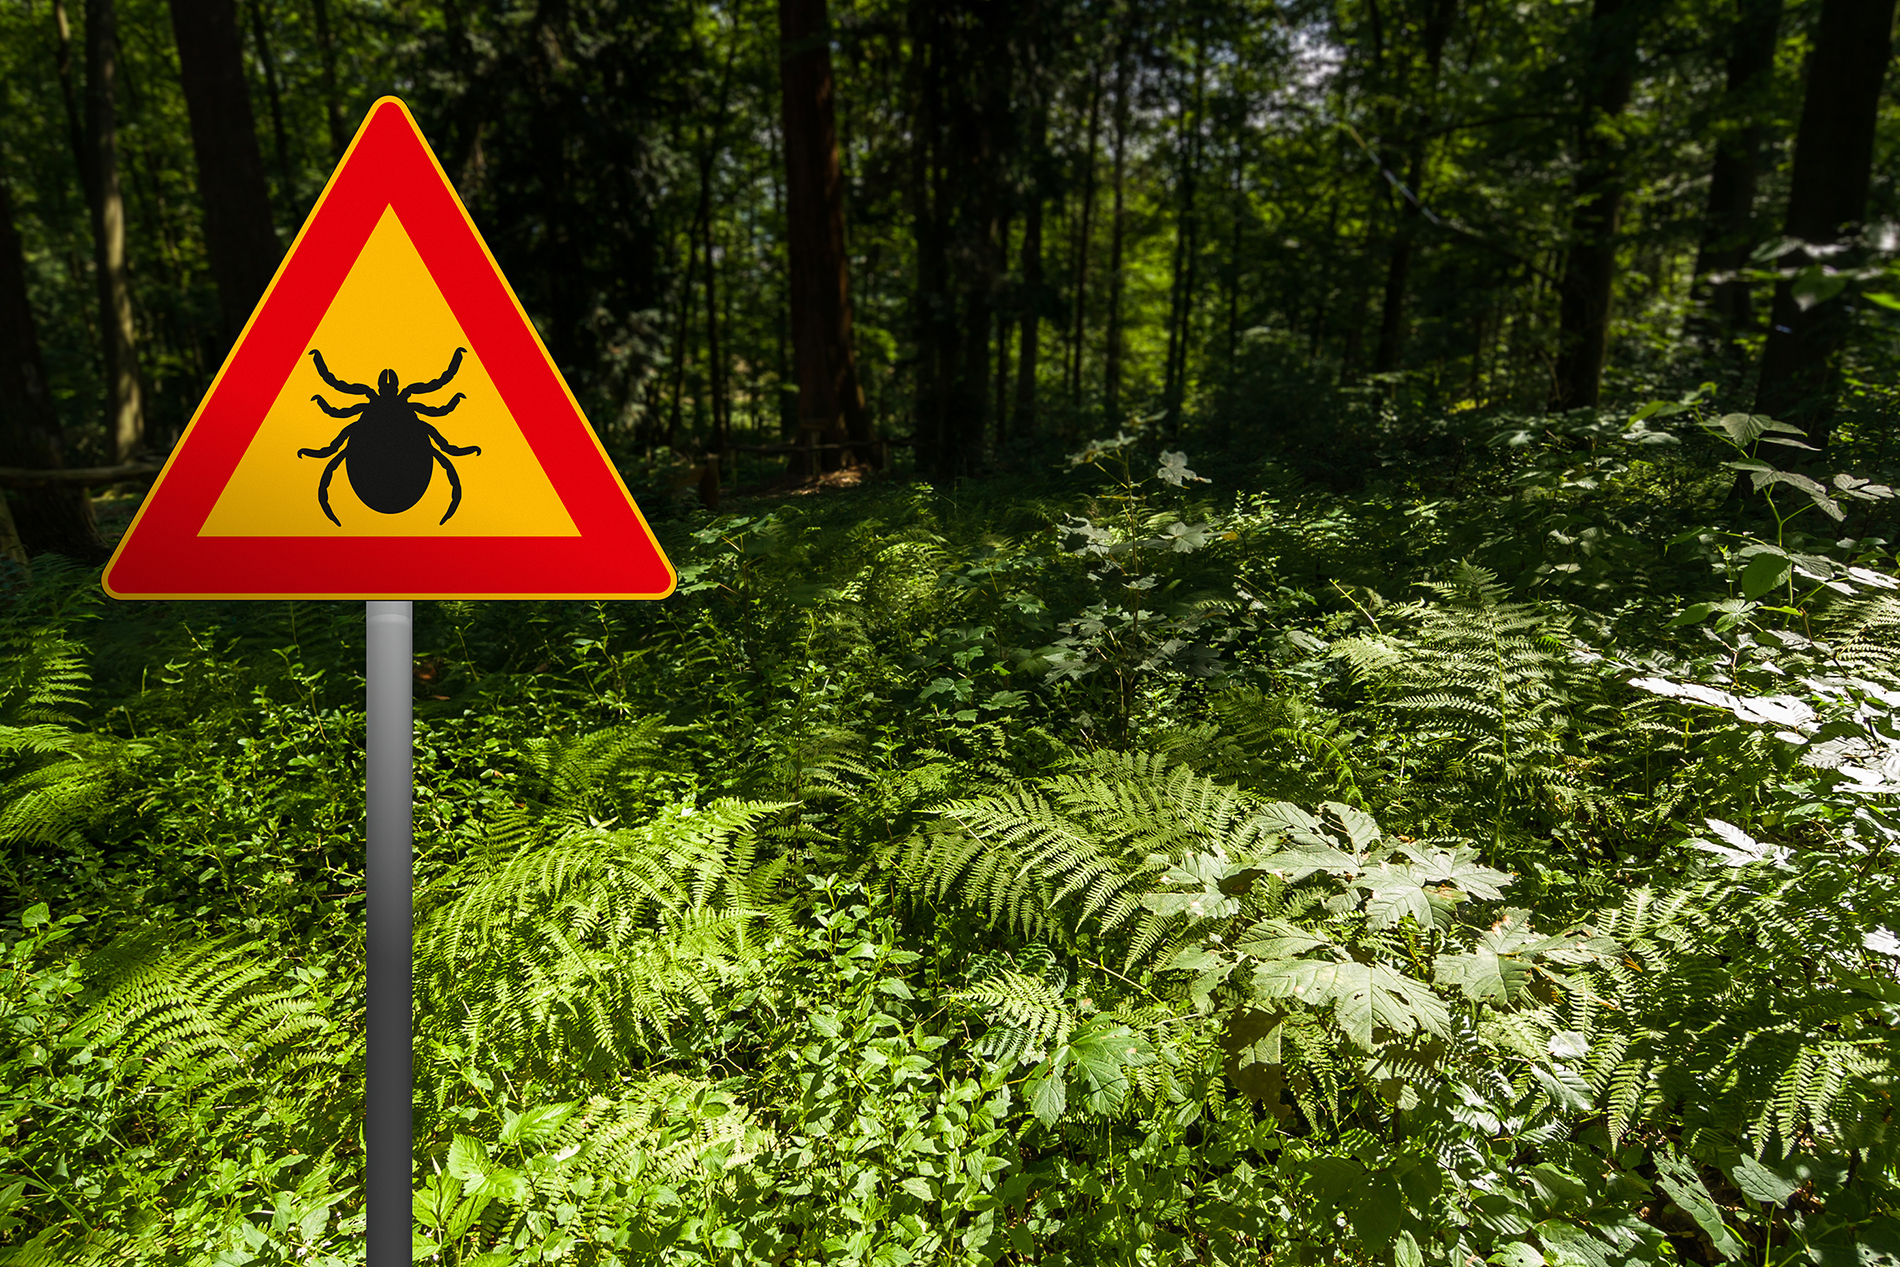 Tick warning sign at entrance to woodland path